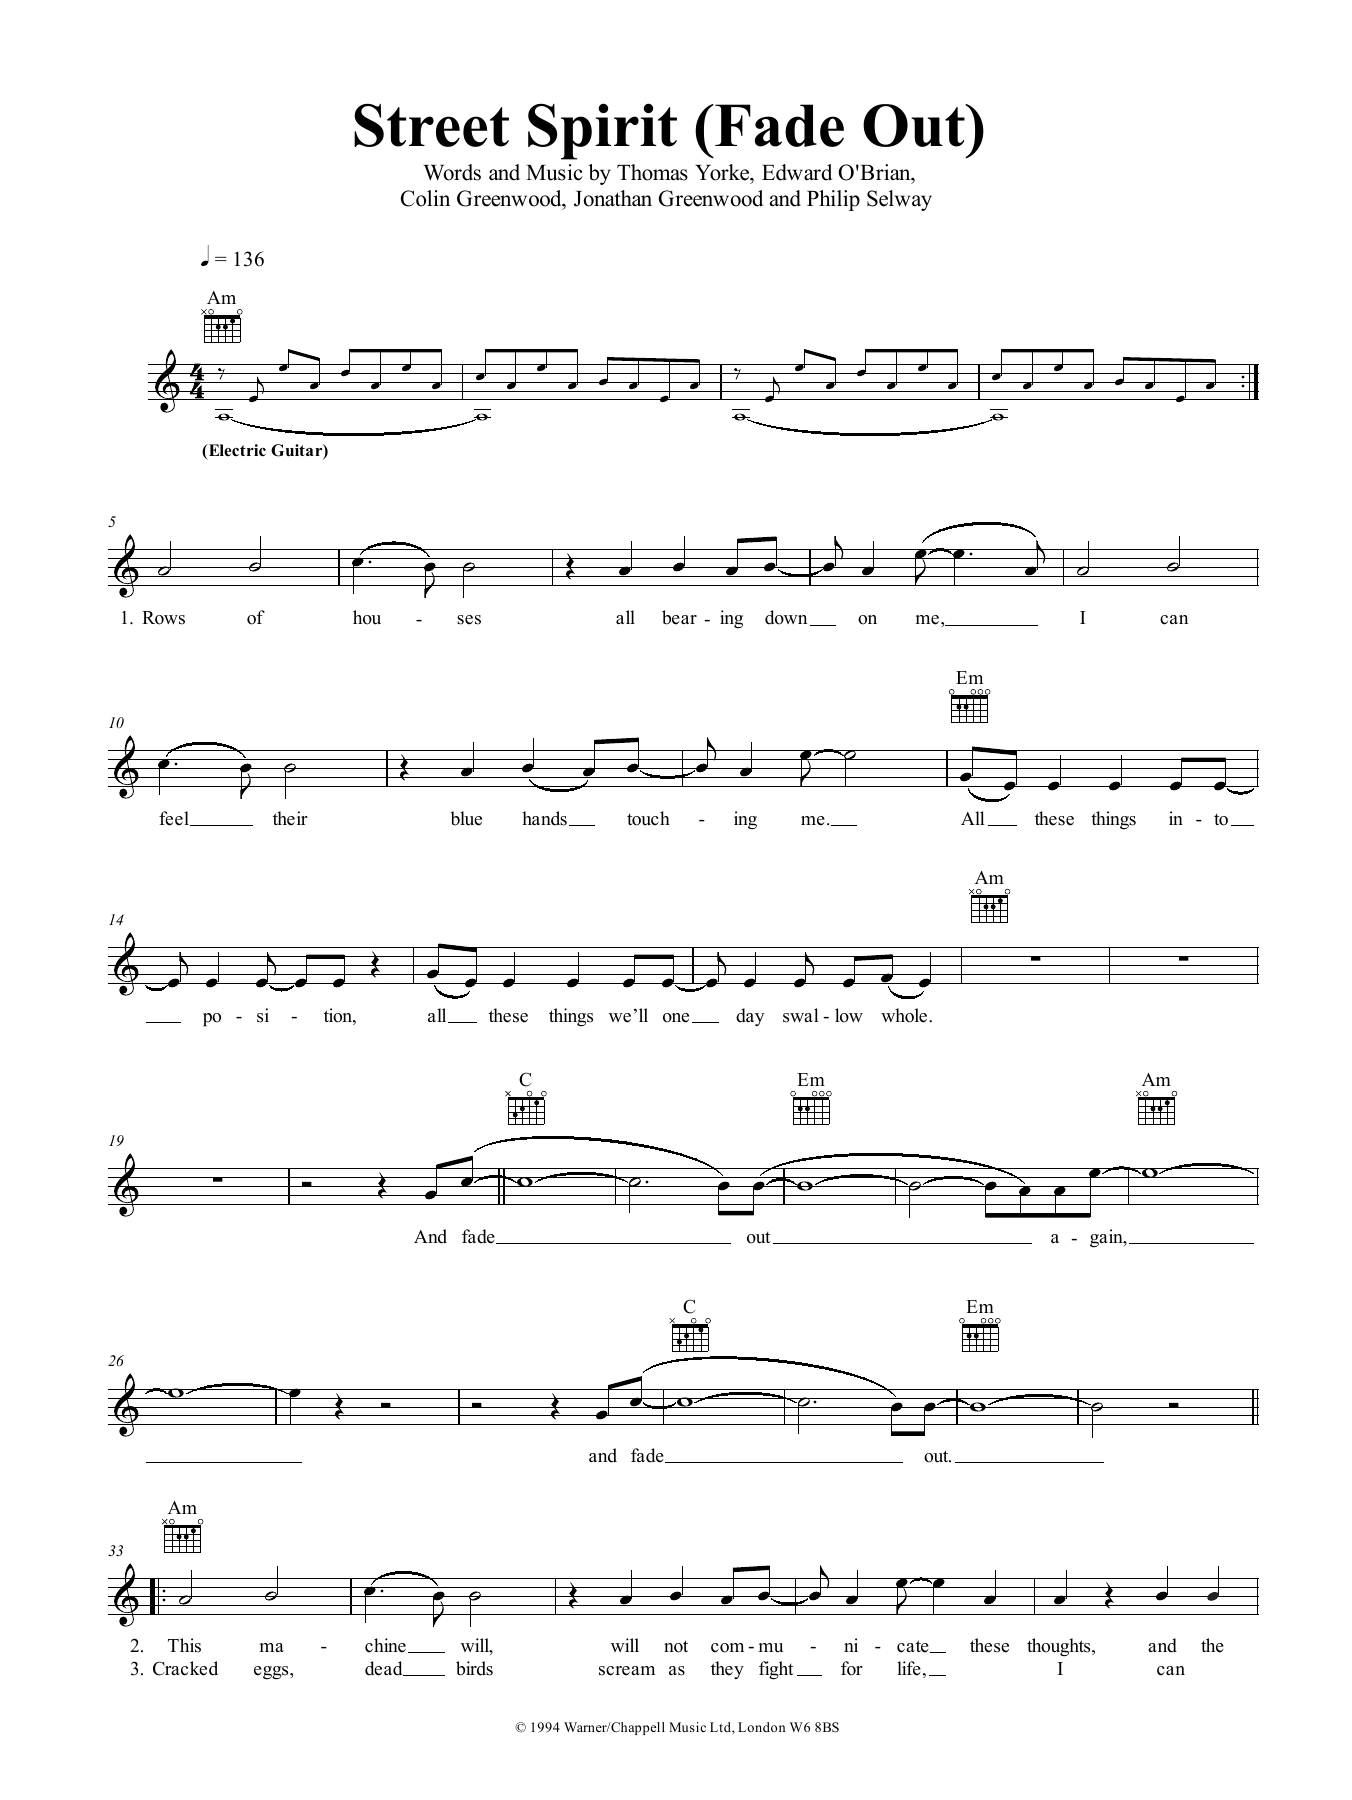 Radiohead Street Spirit (Fade Out) Sheet Music Notes & Chords for Lead Sheet / Fake Book - Download or Print PDF